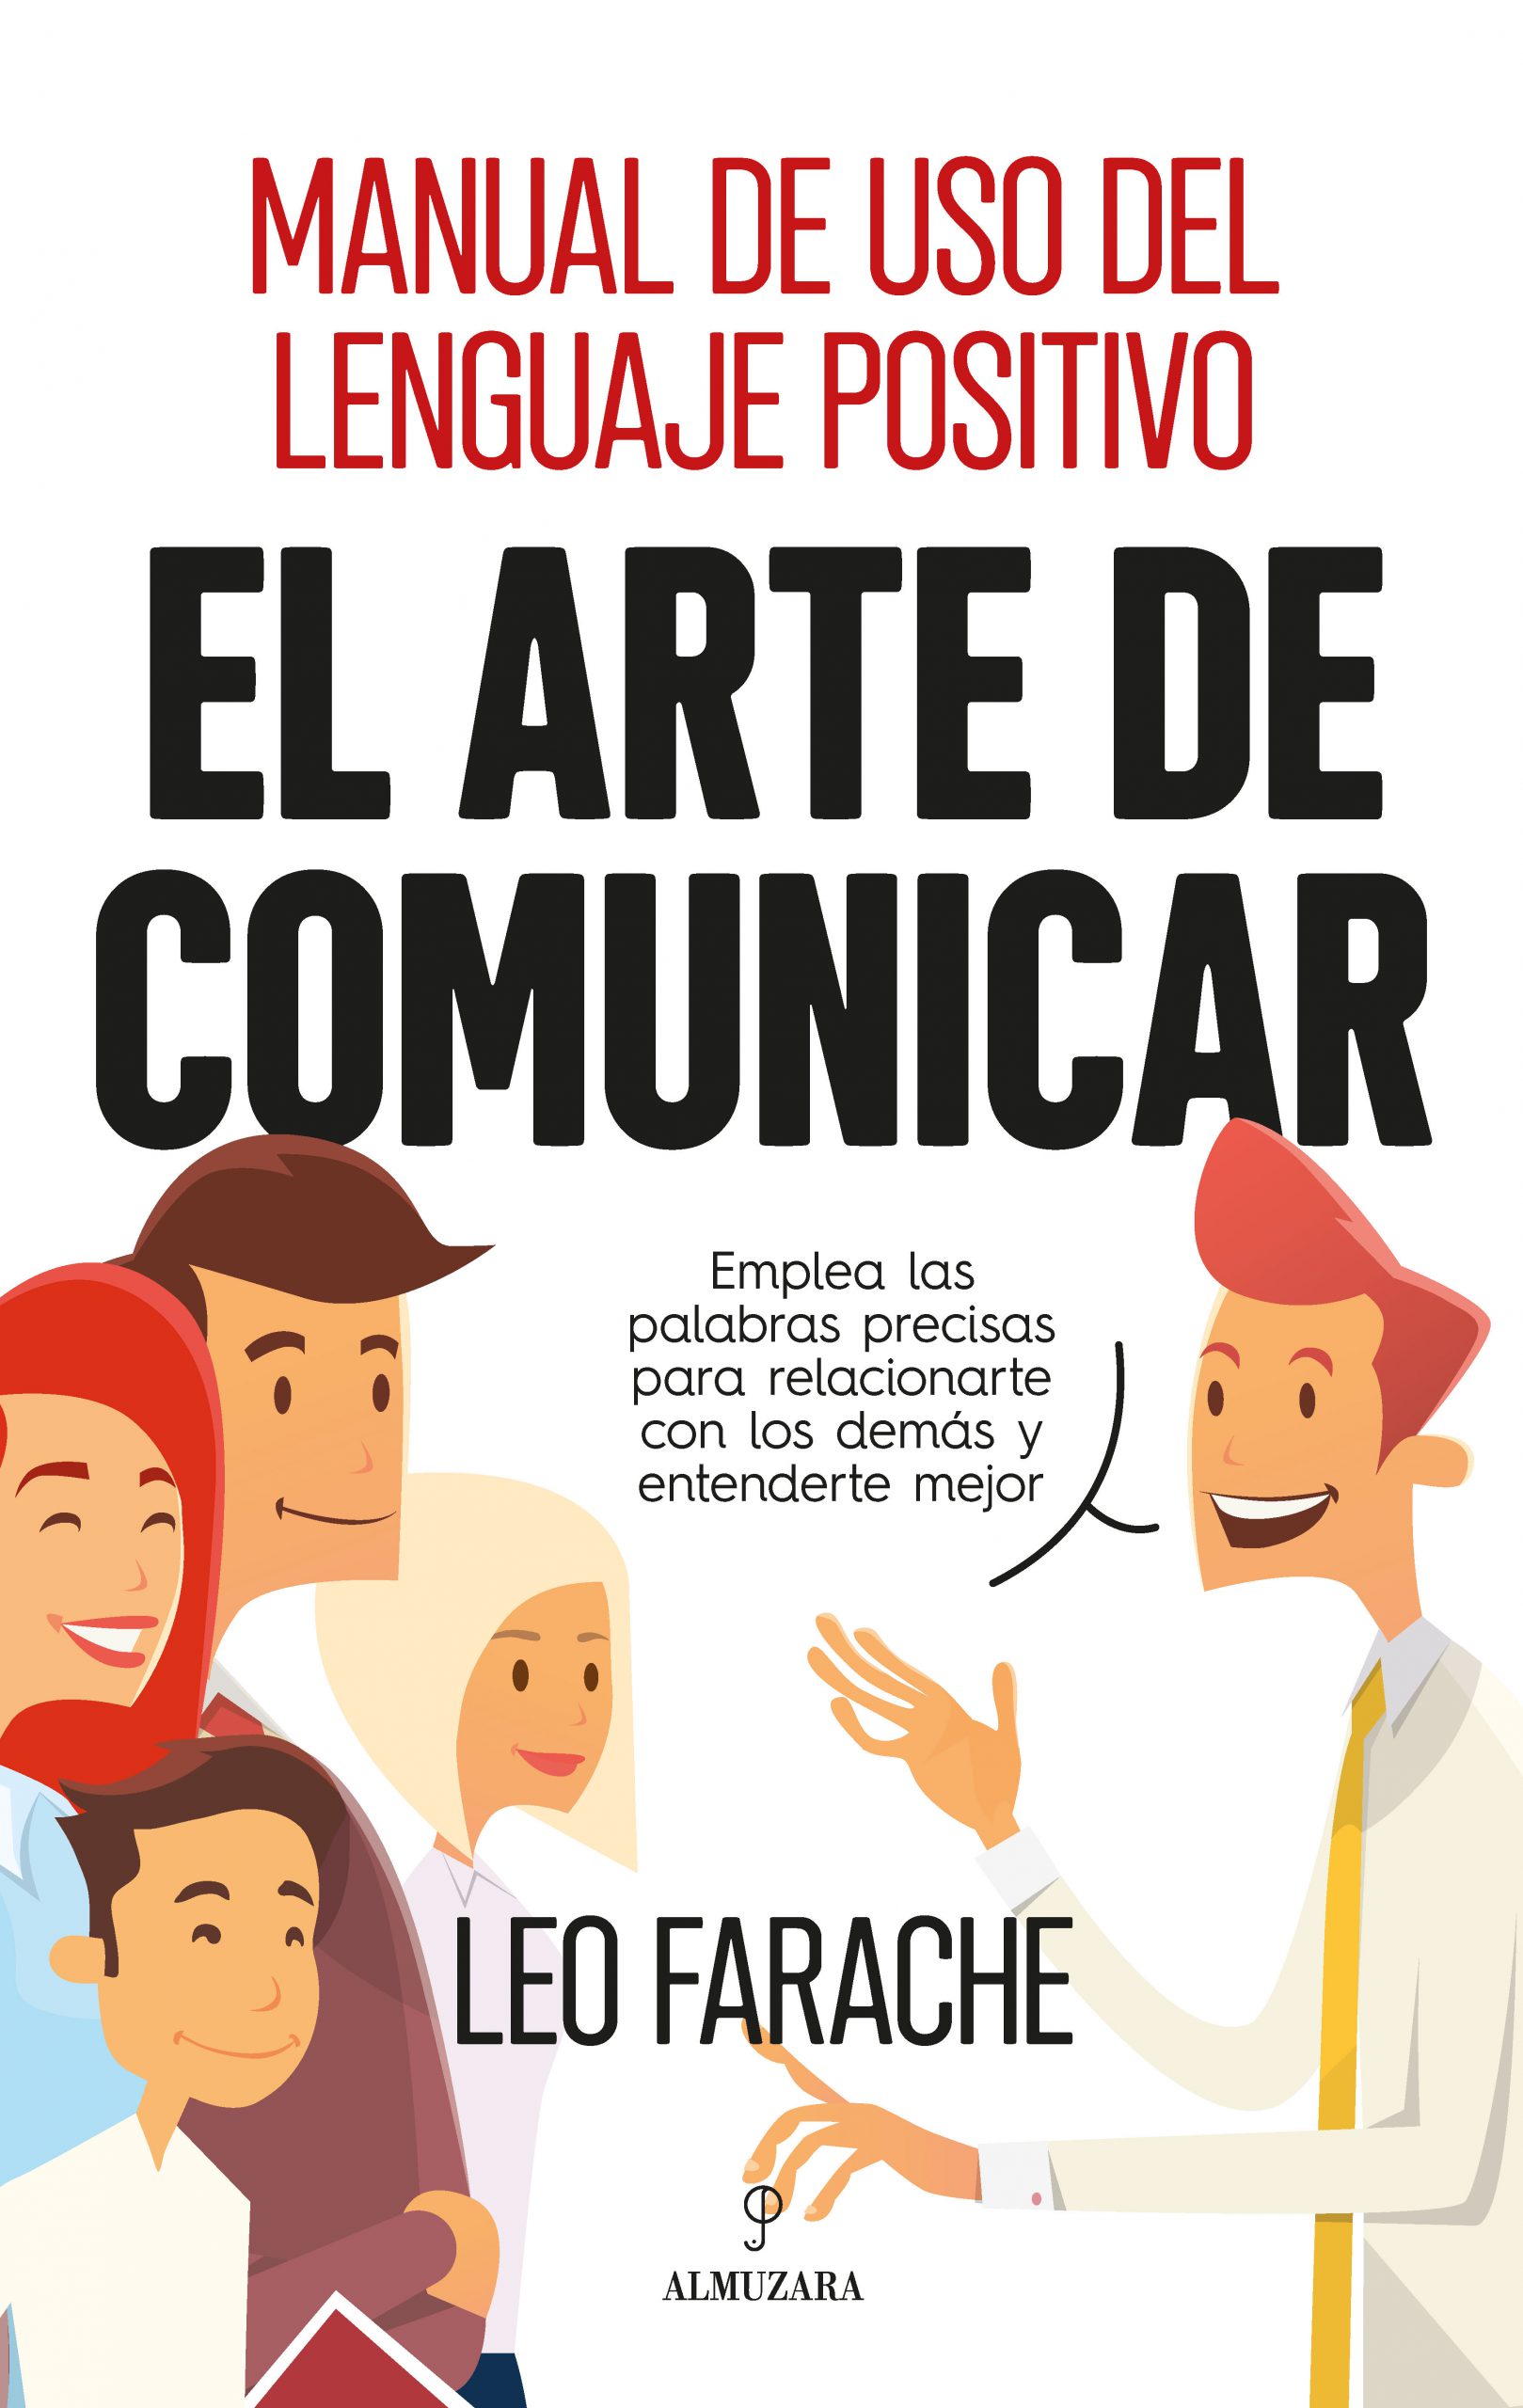 EL ARTE DE COMUNICAR
Manual de uso del lenguaje positivo